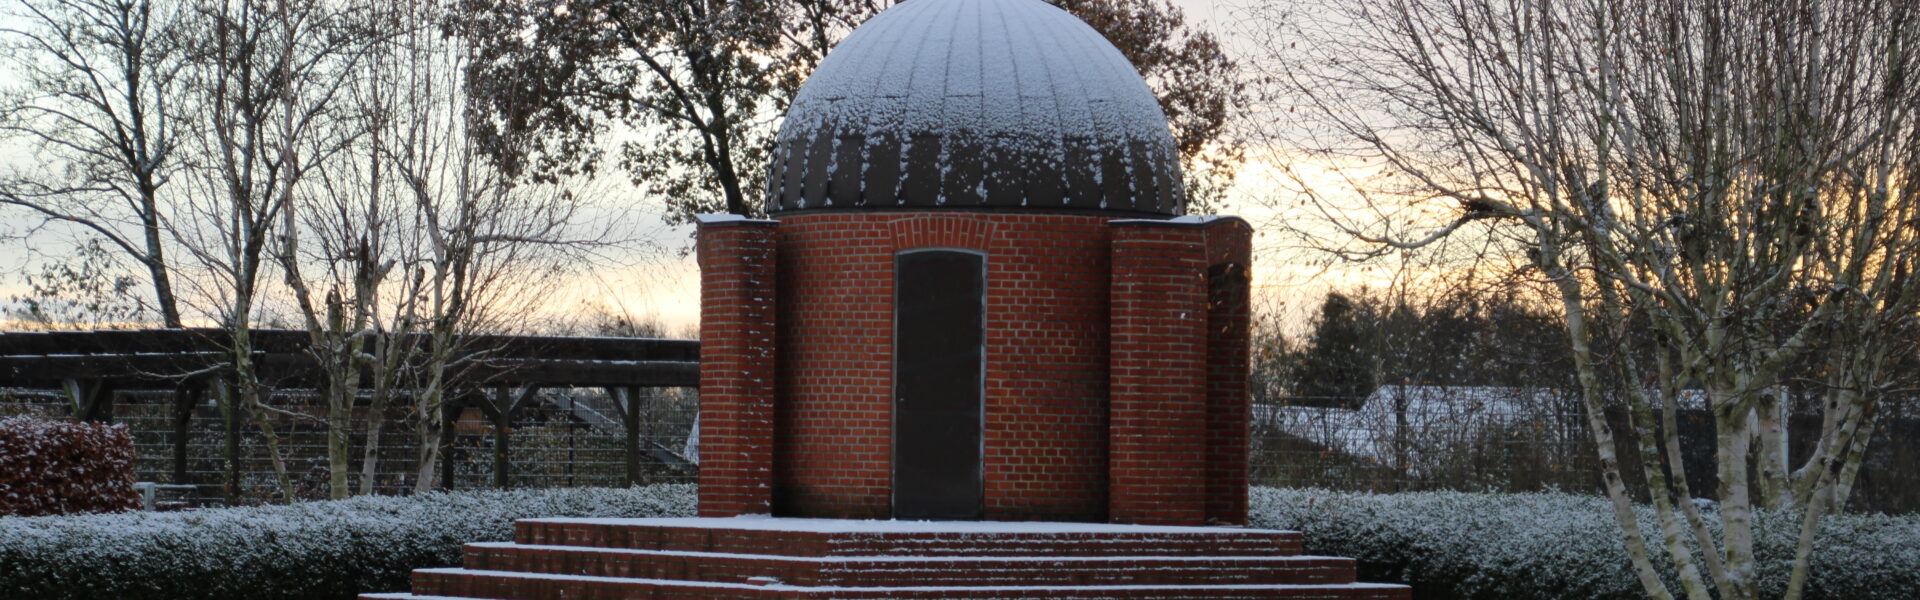 Per Kirkebys observatorium i skulpturparken på gymnasiet.